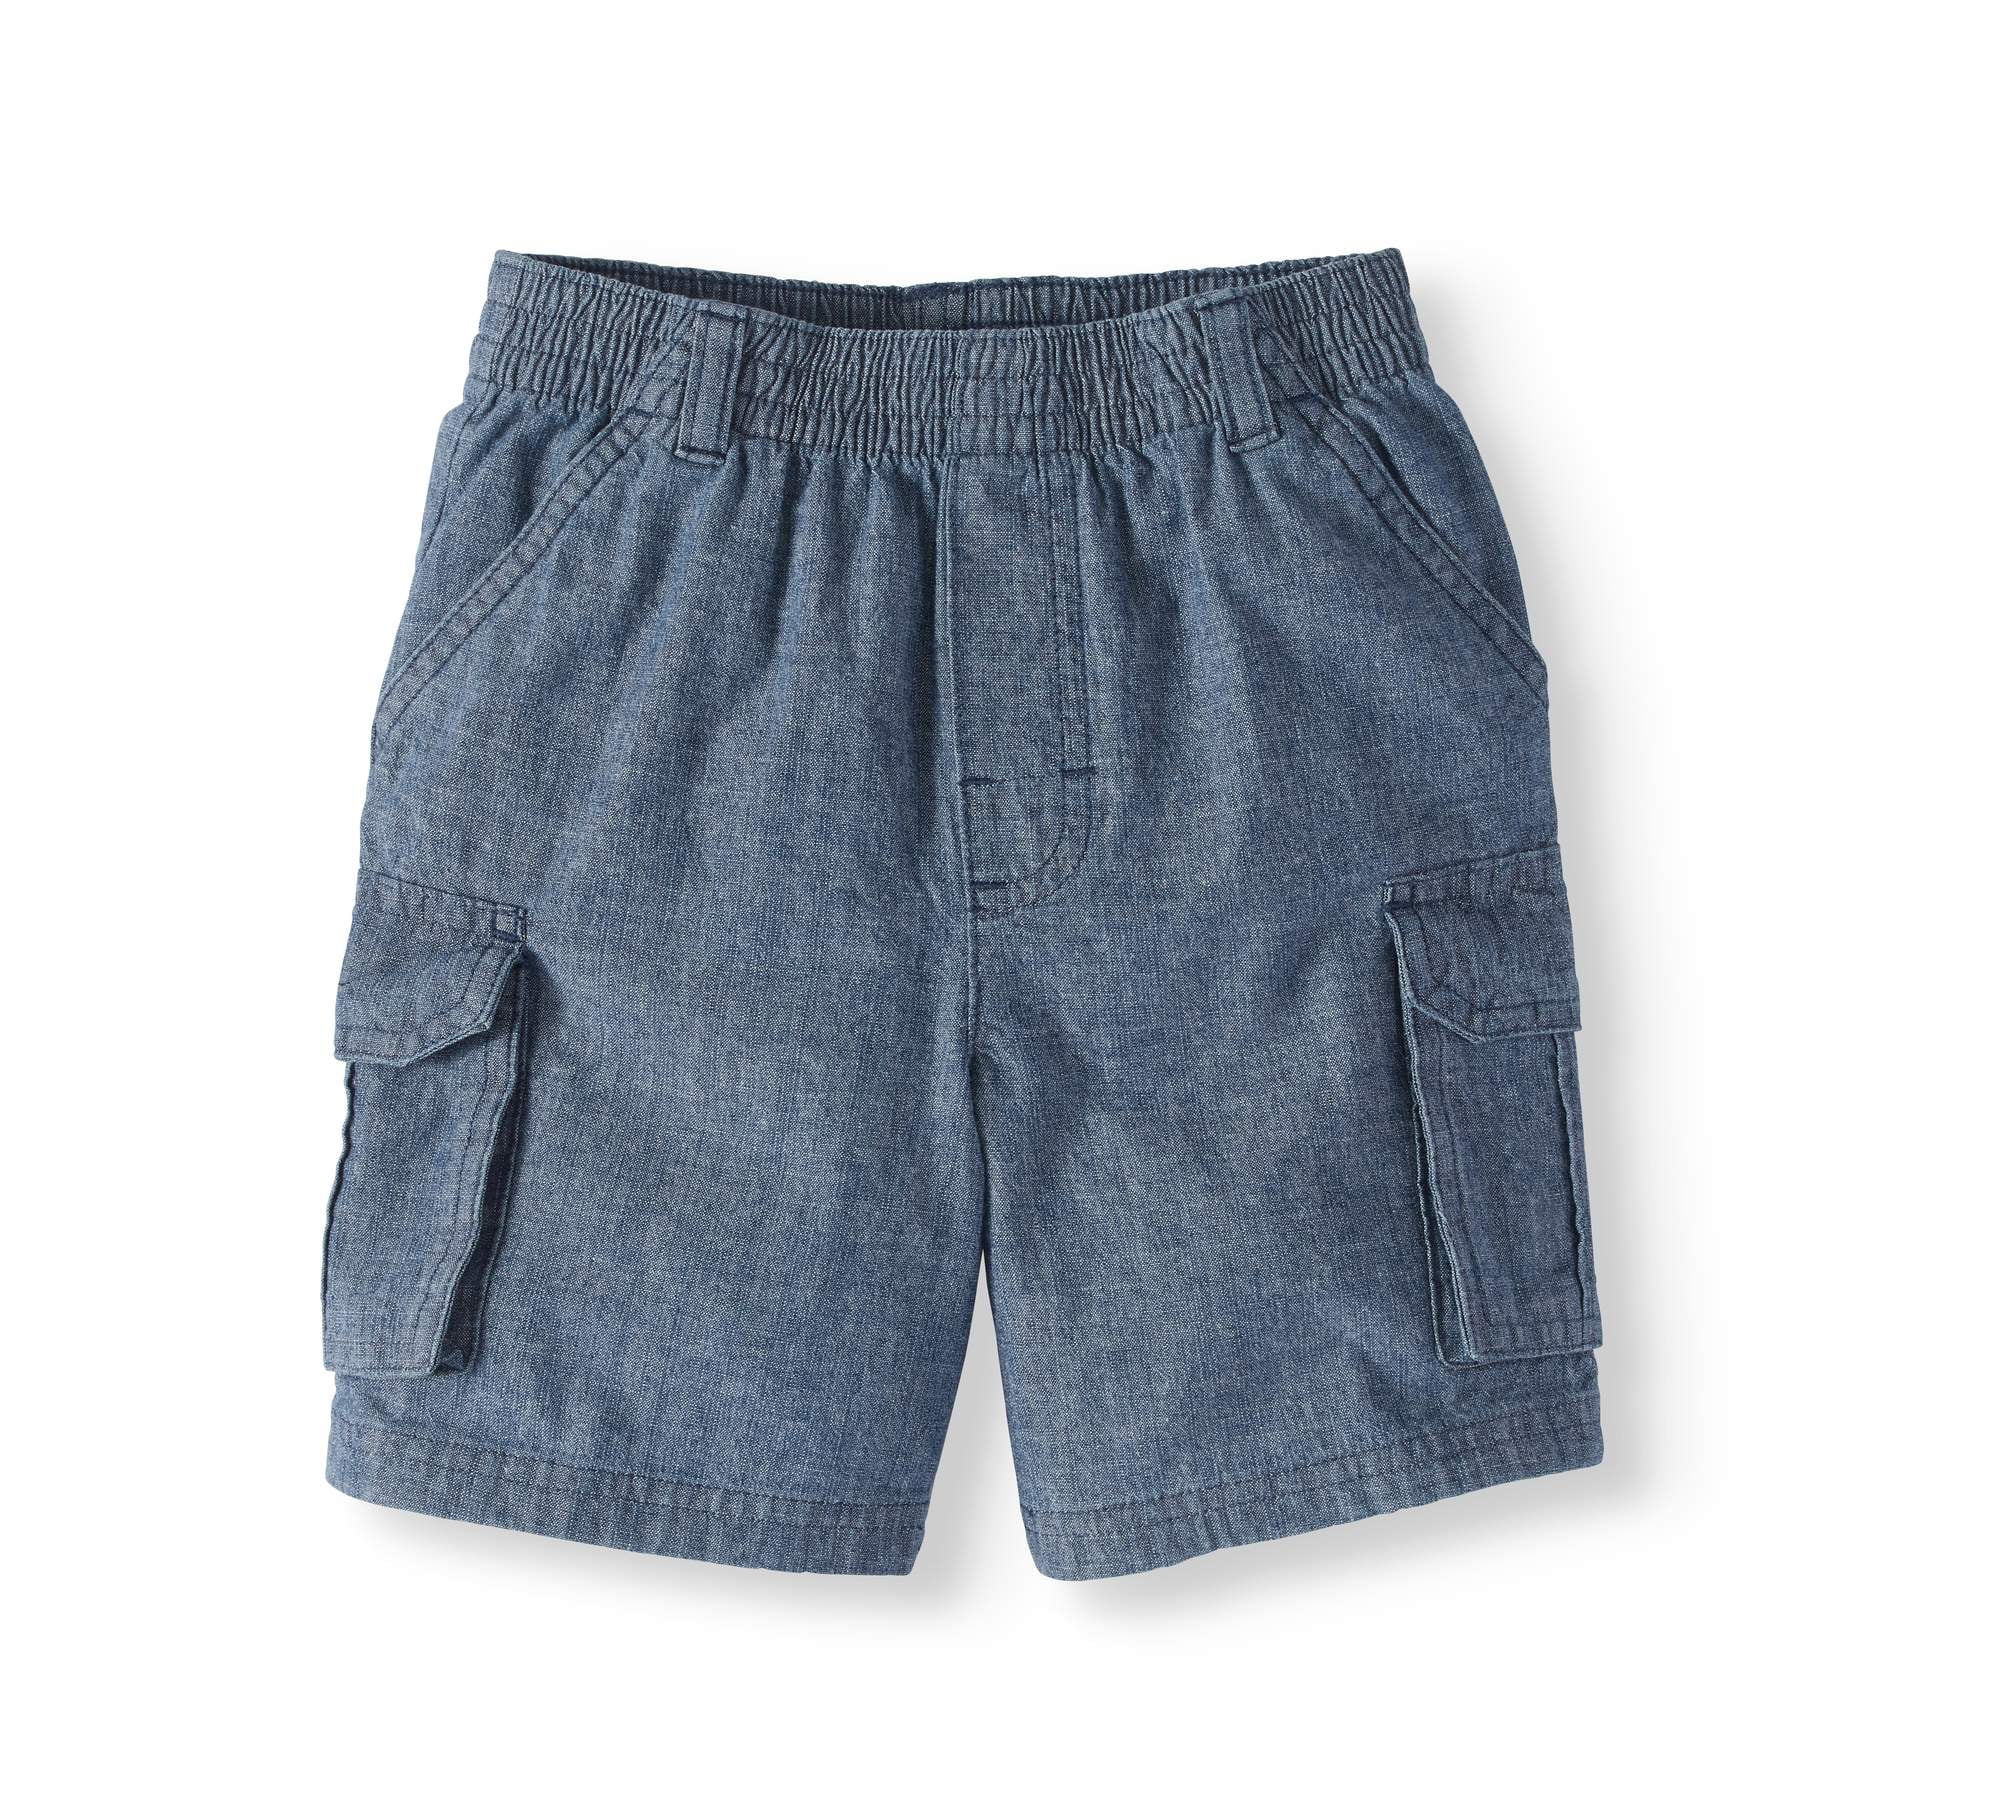 boys denim cargo shorts